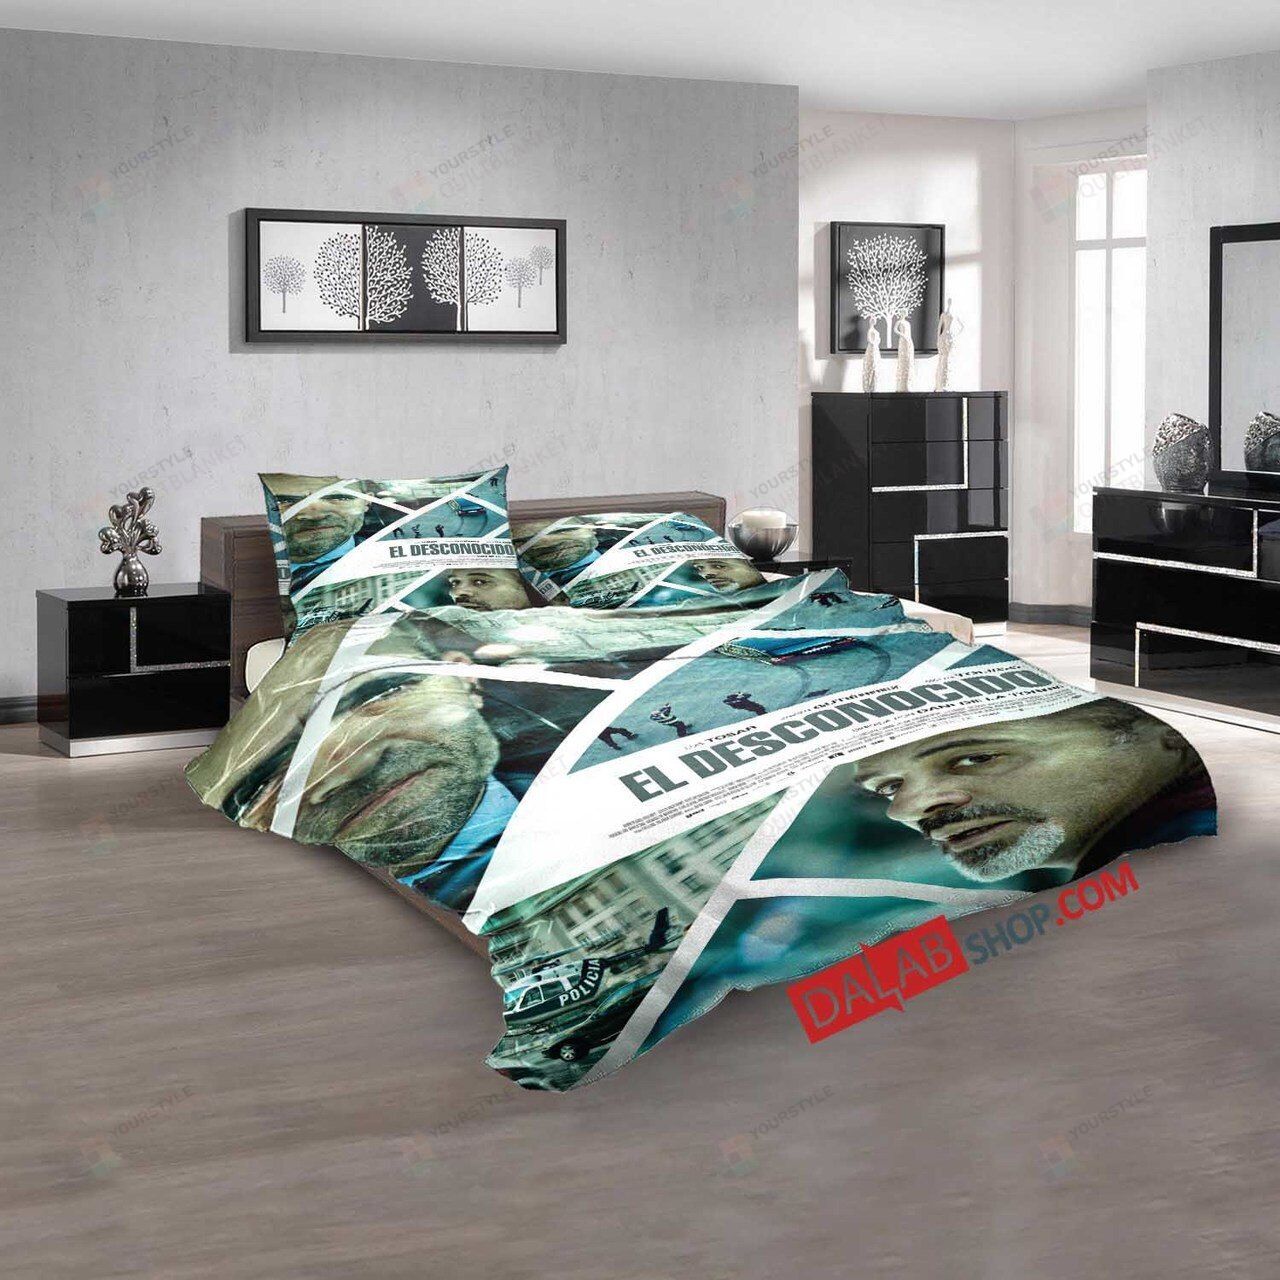 Netflix Movie Retribution D 3d Customized Duvet Cover Bedroom Sets Bedding Sets